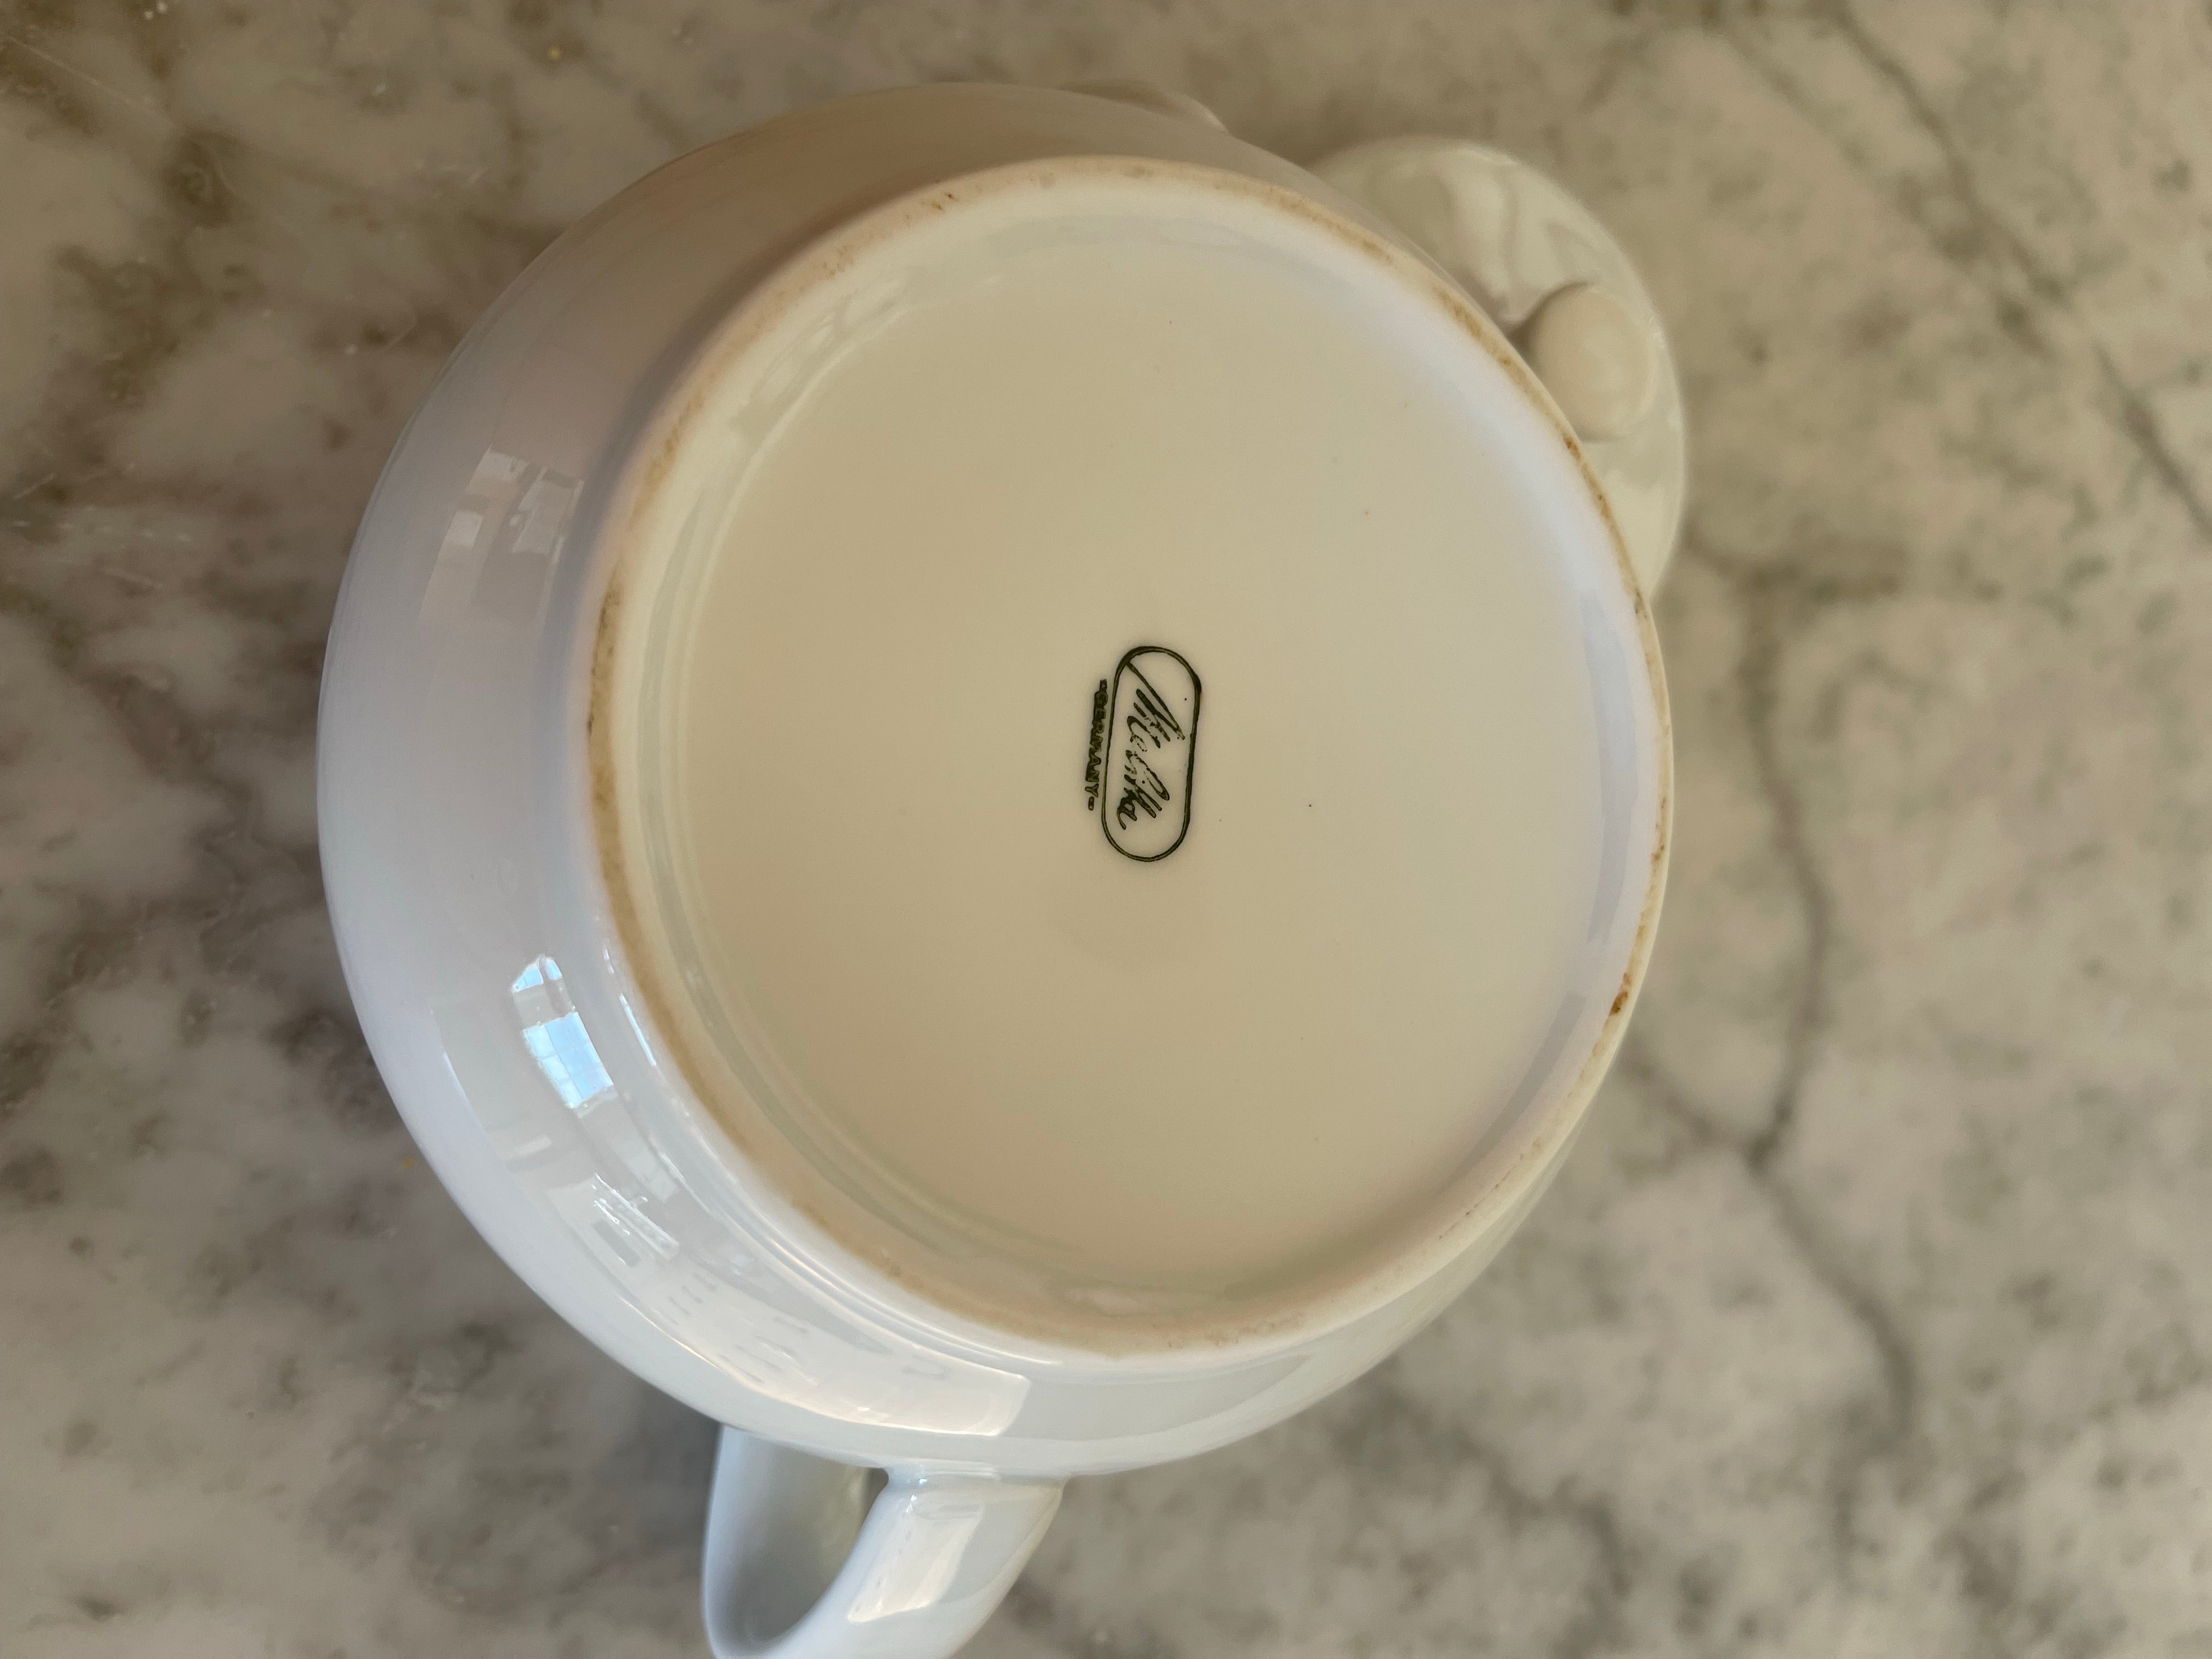 Vintage Melitta Germany White Porcelain Teapot Coffee Pot MCM